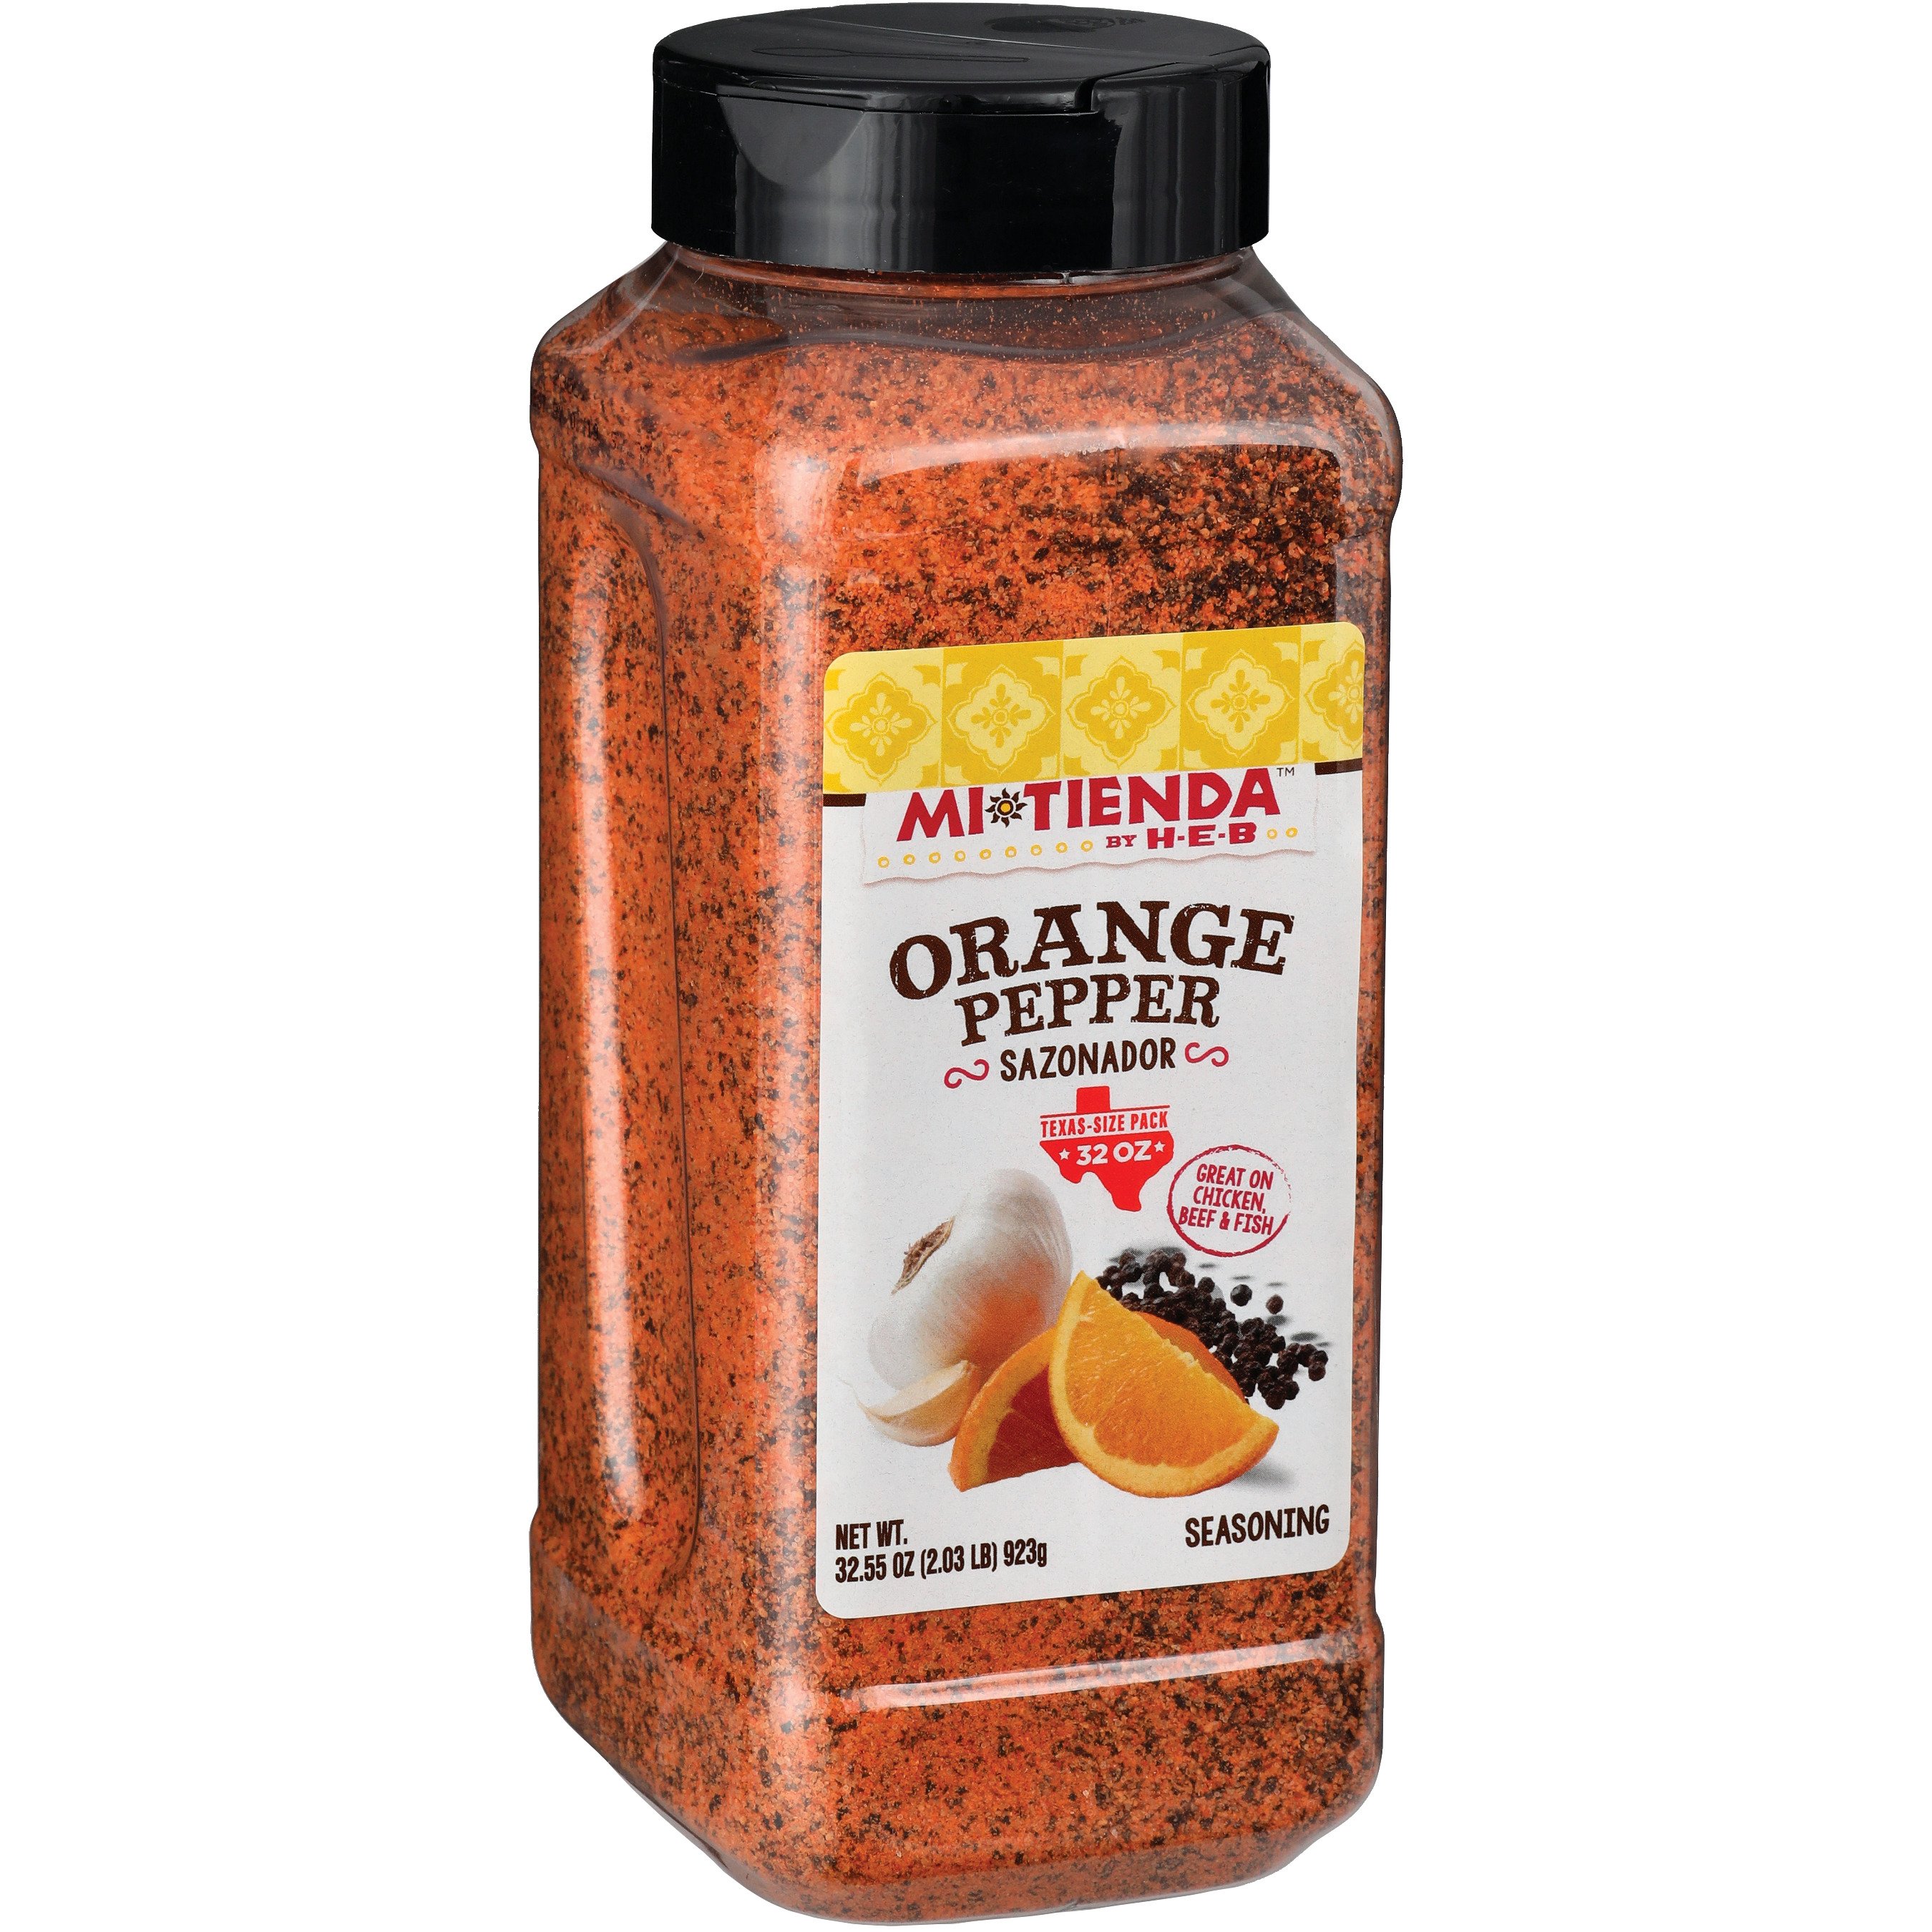 Orange Pepper Seasoning Recipe